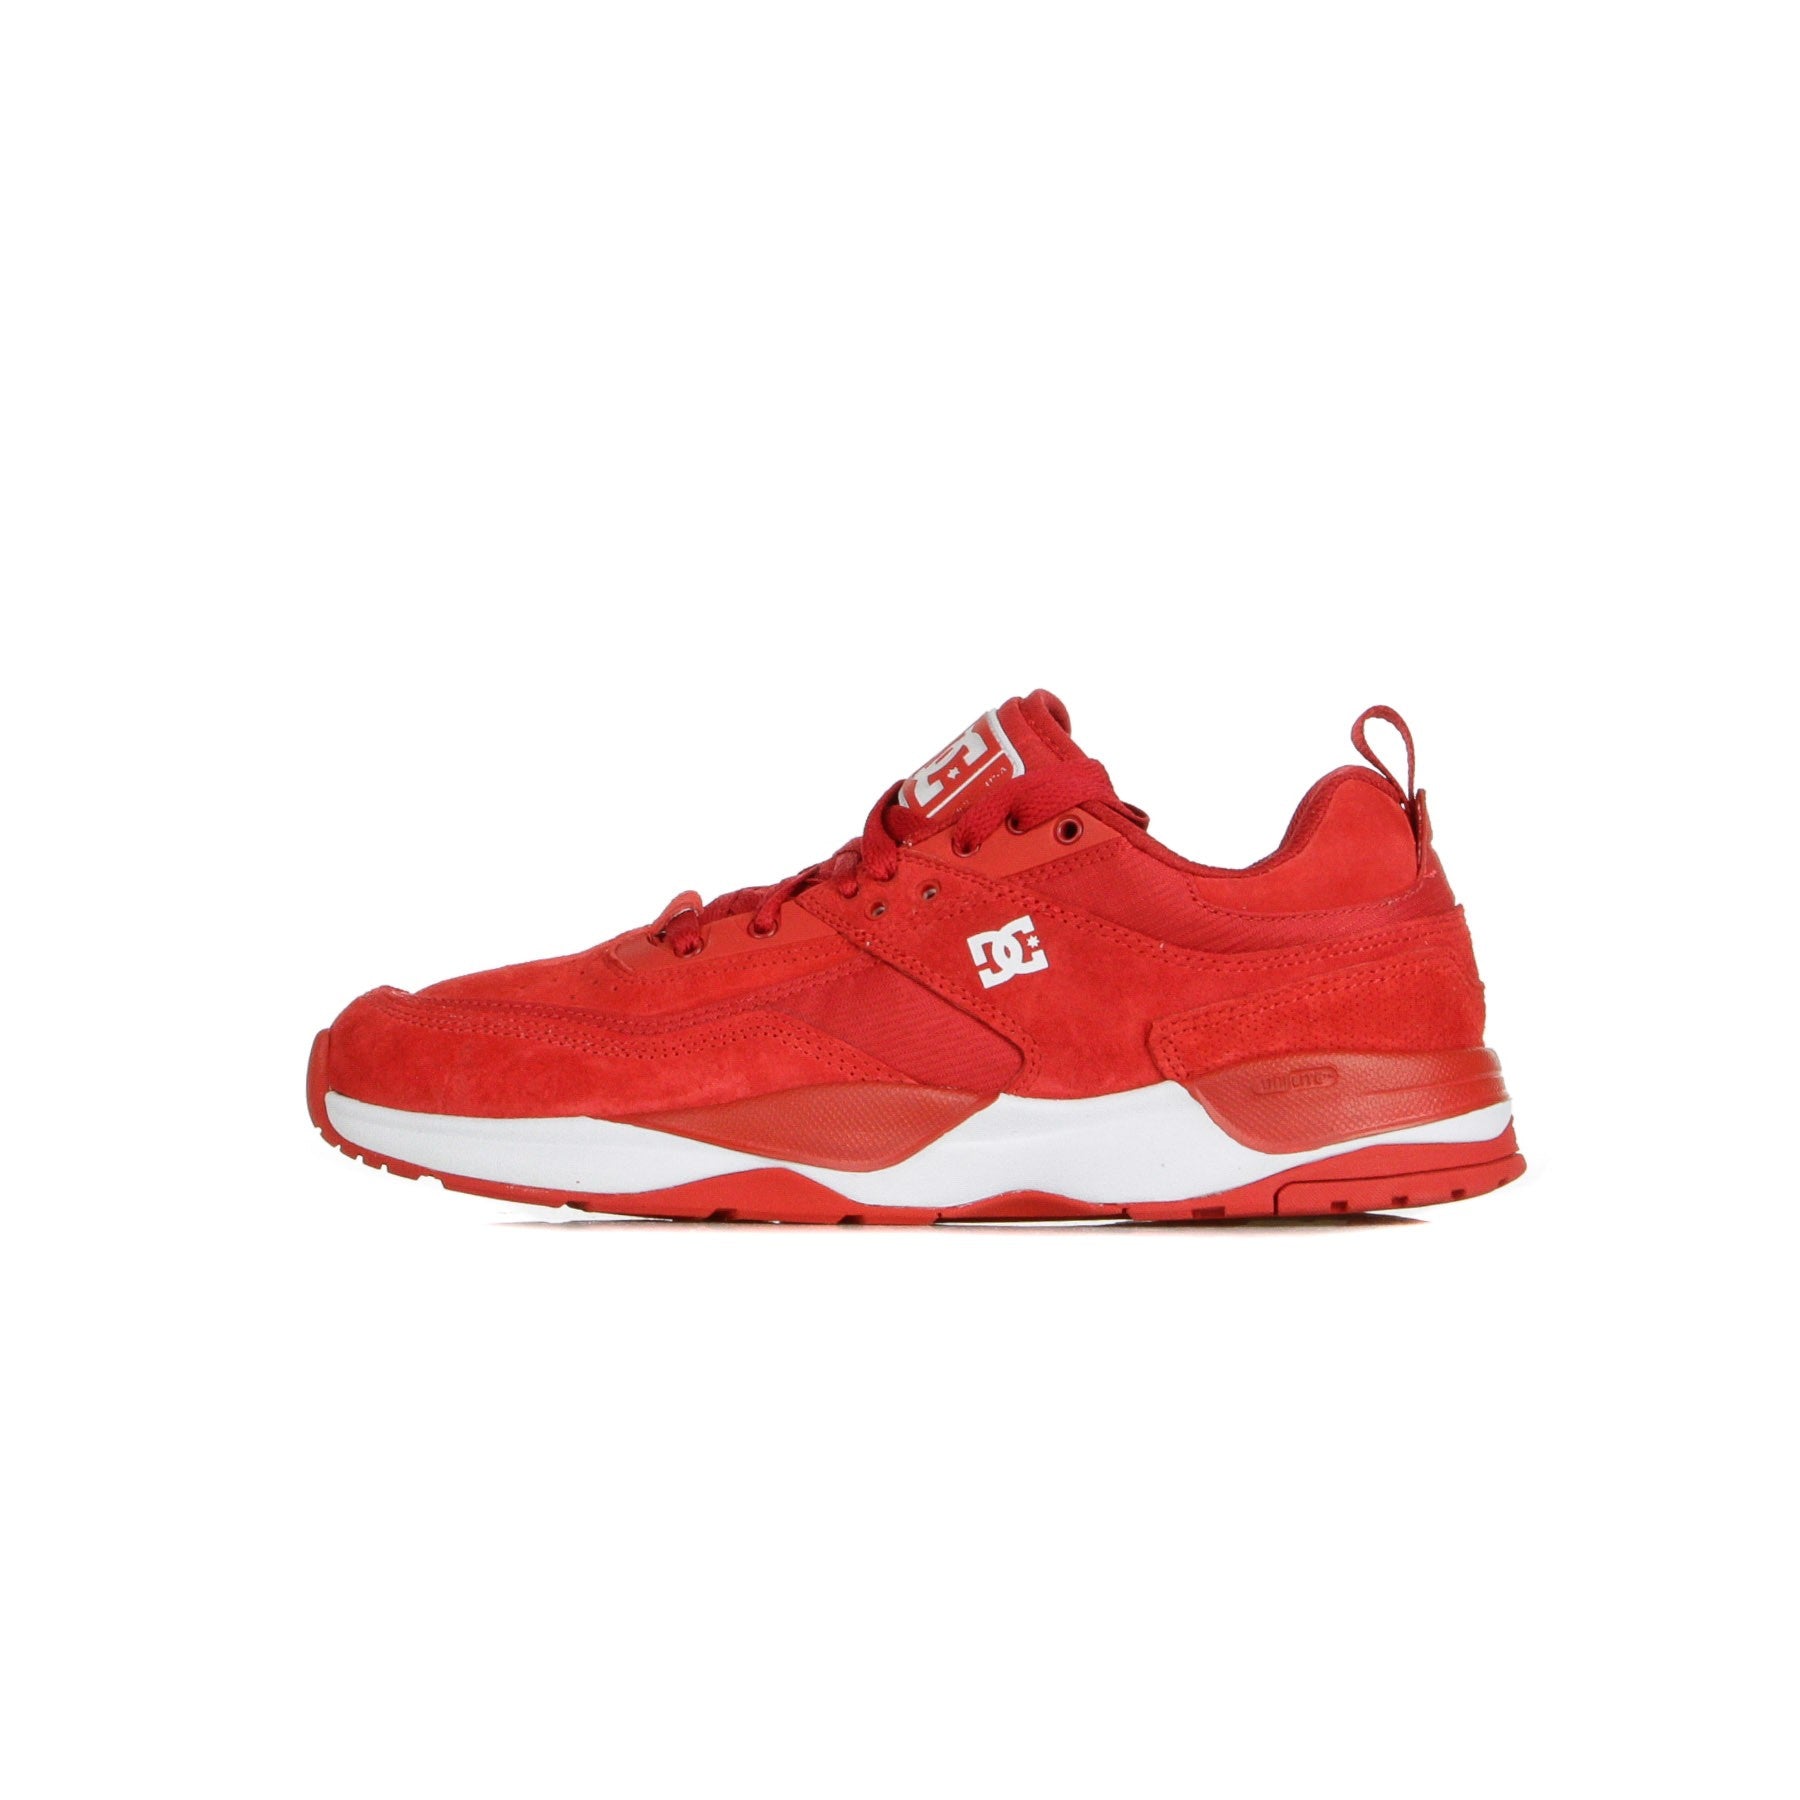 Dc Shoes, Scarpa Bassa Uomo E. Tribeka, Red